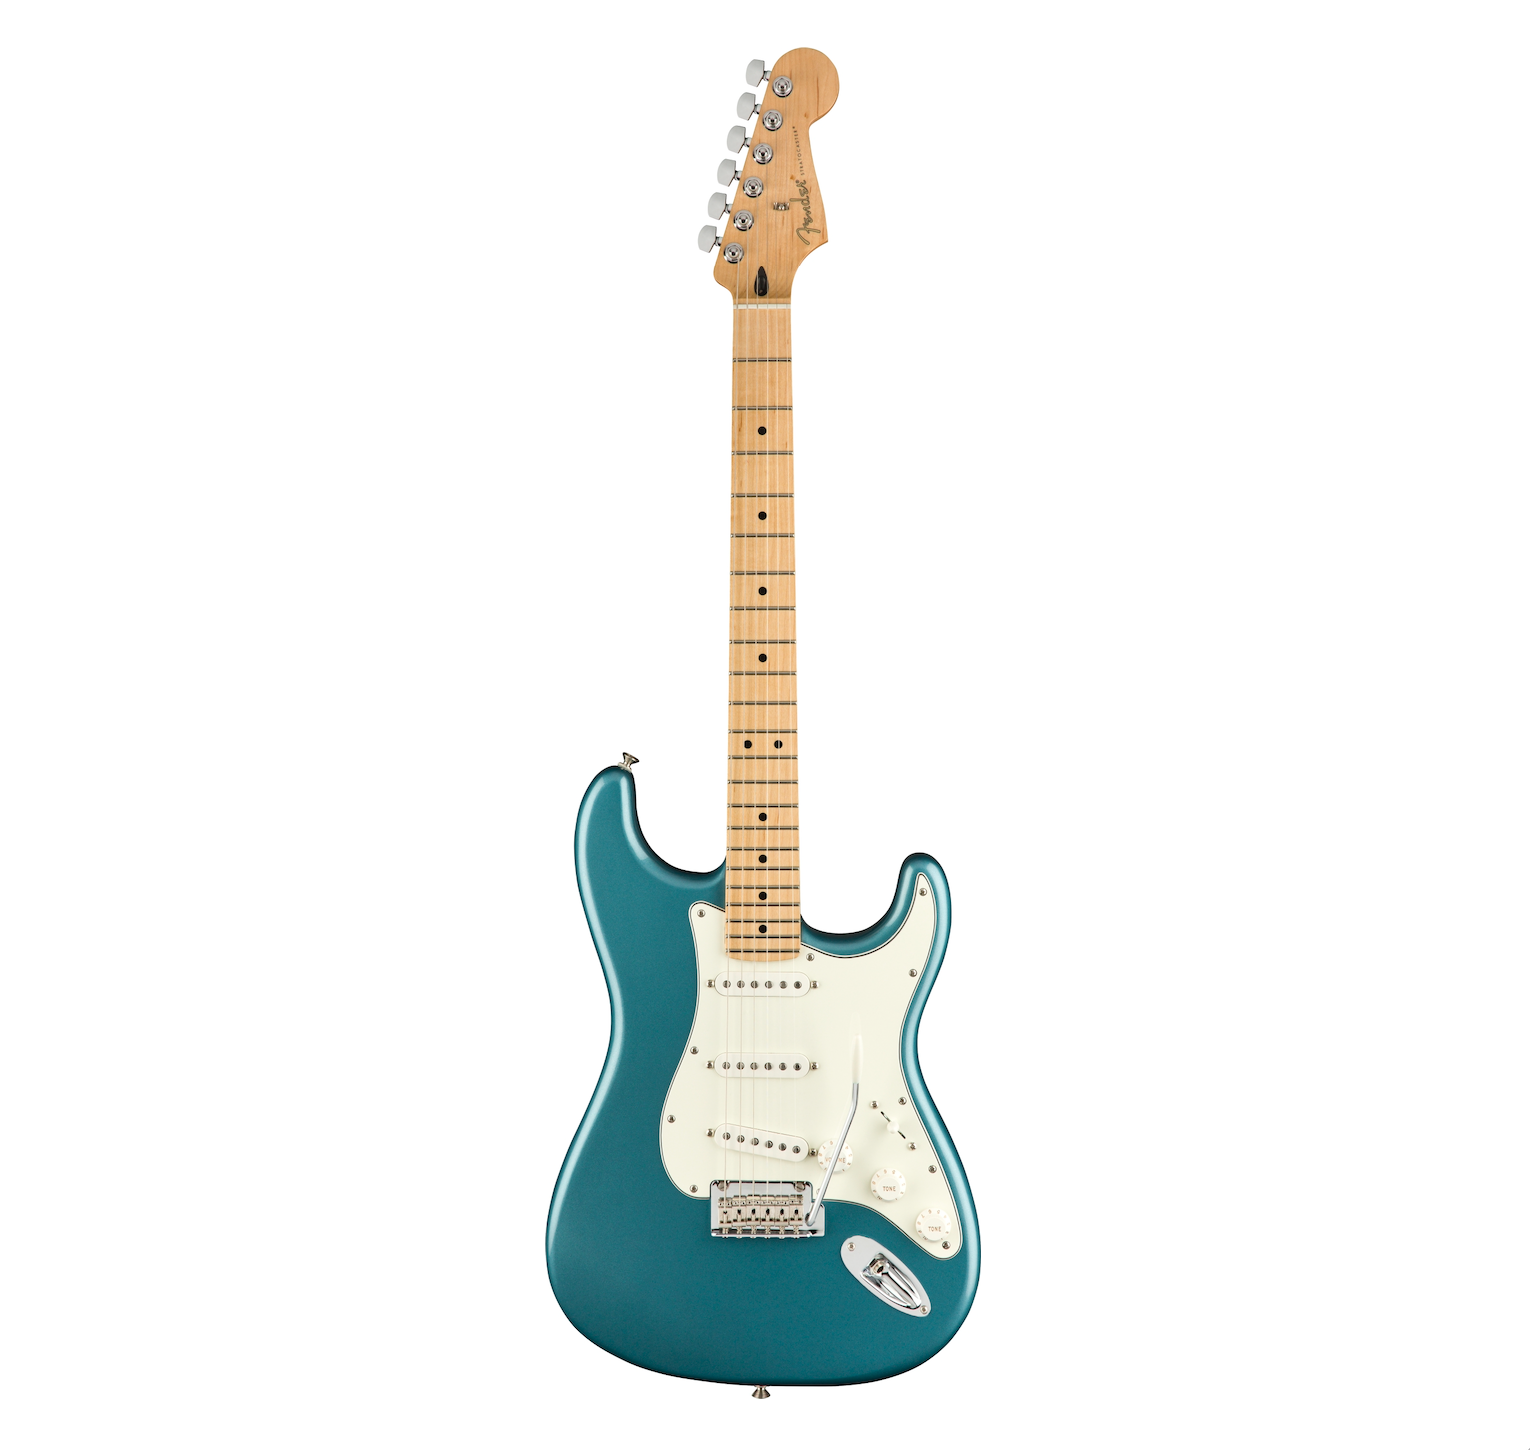 Fender Player Stratocaster Tidepool